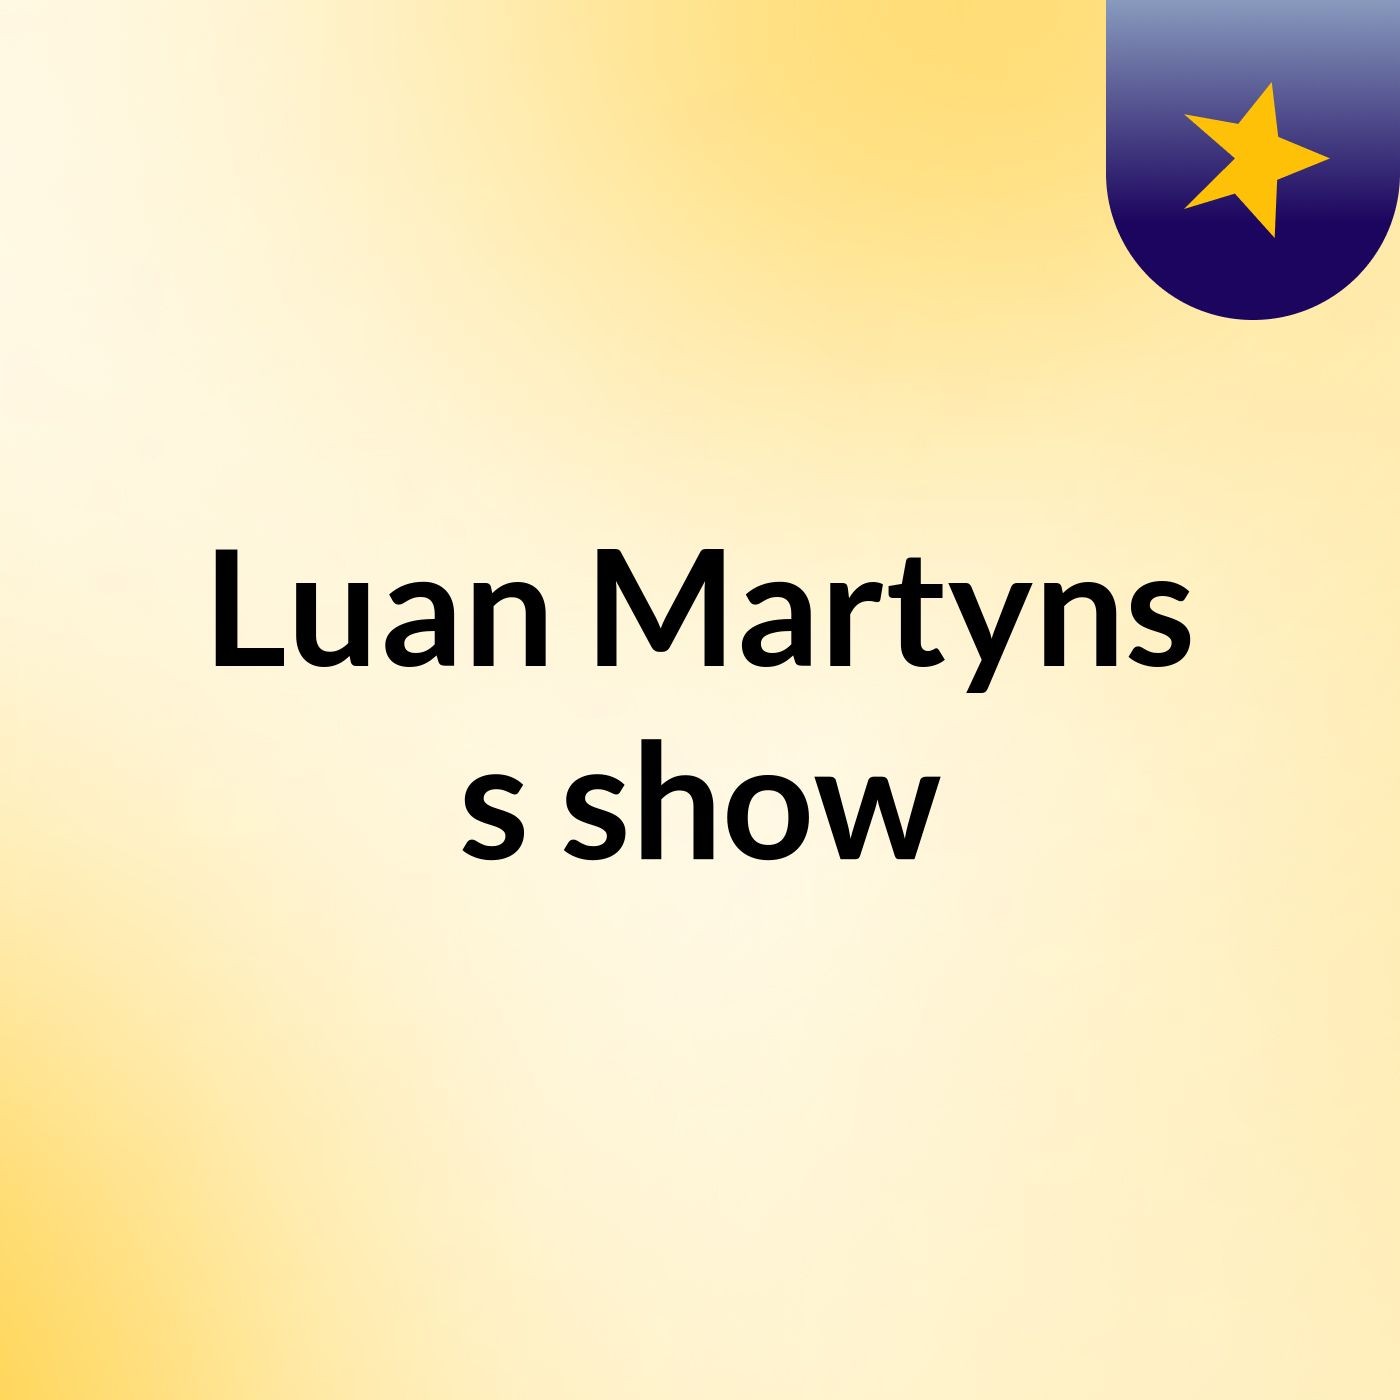 Luan Martyns's show